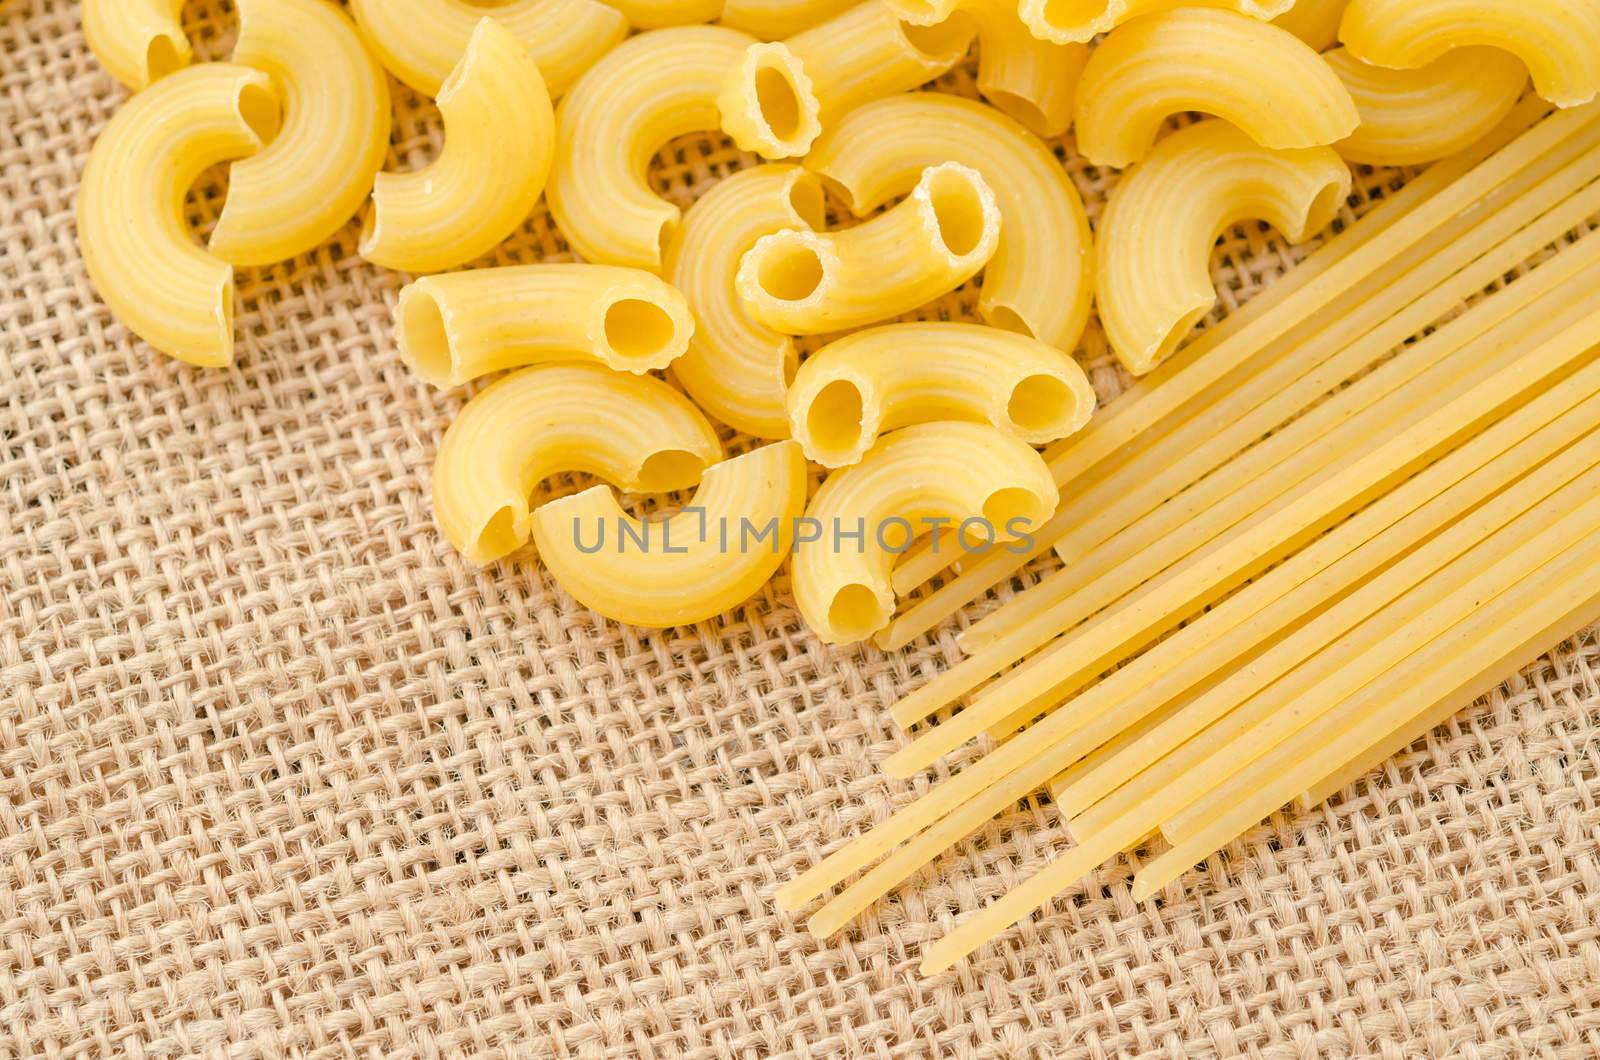 Raw Spaghetti Macaroni. Italian Pasta raw food collection on sack background.